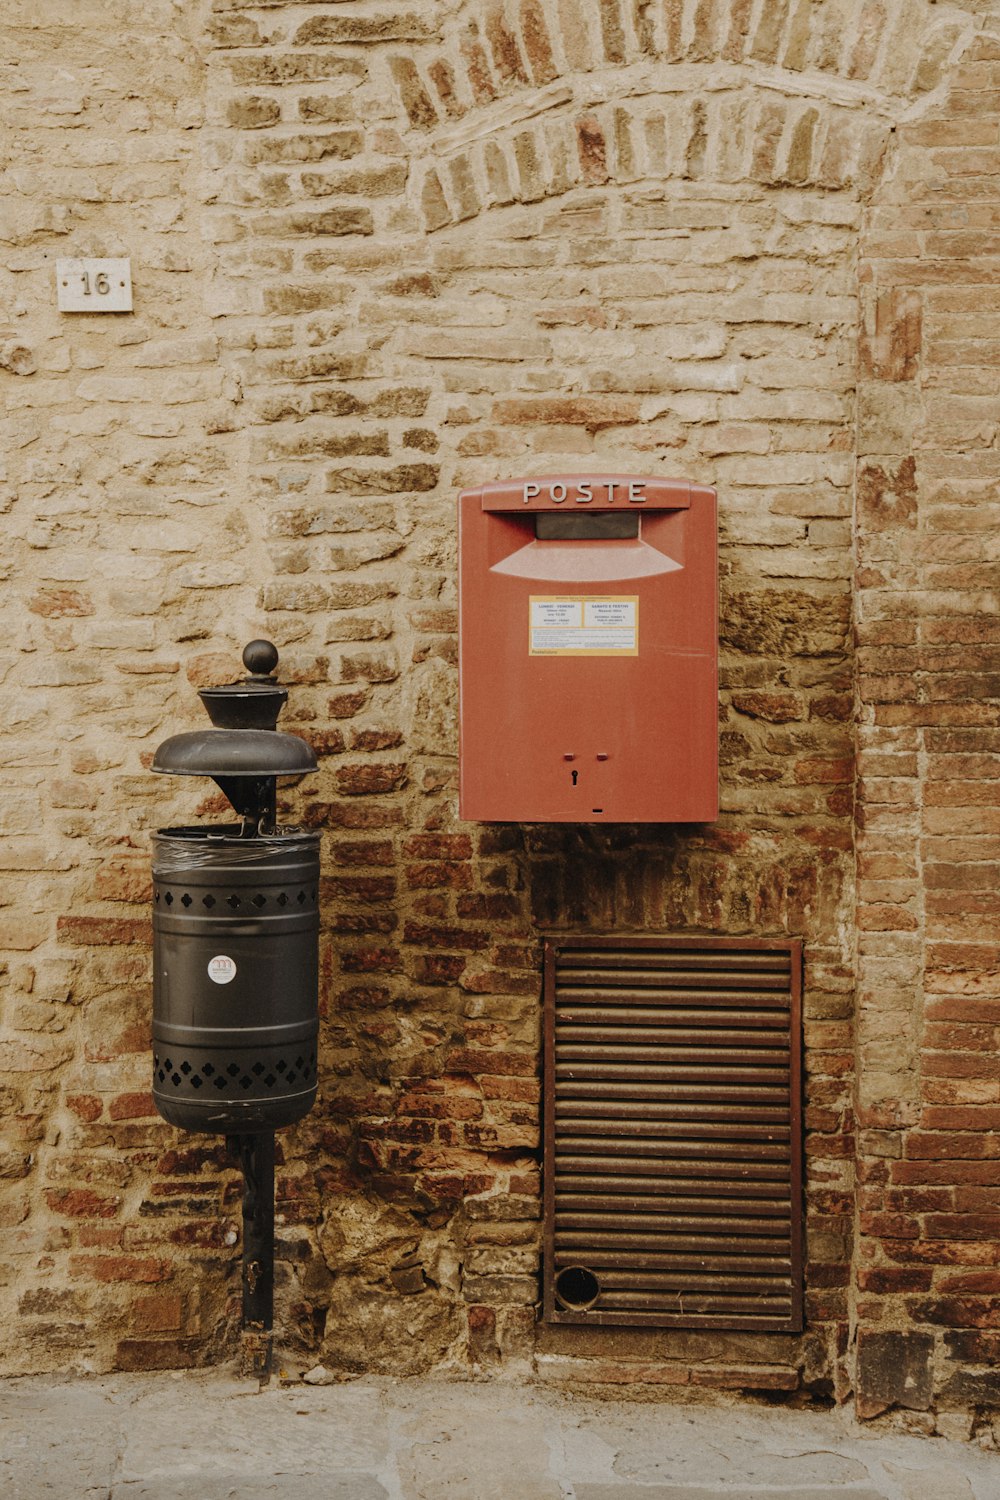 a red mailbox next to a black mailbox